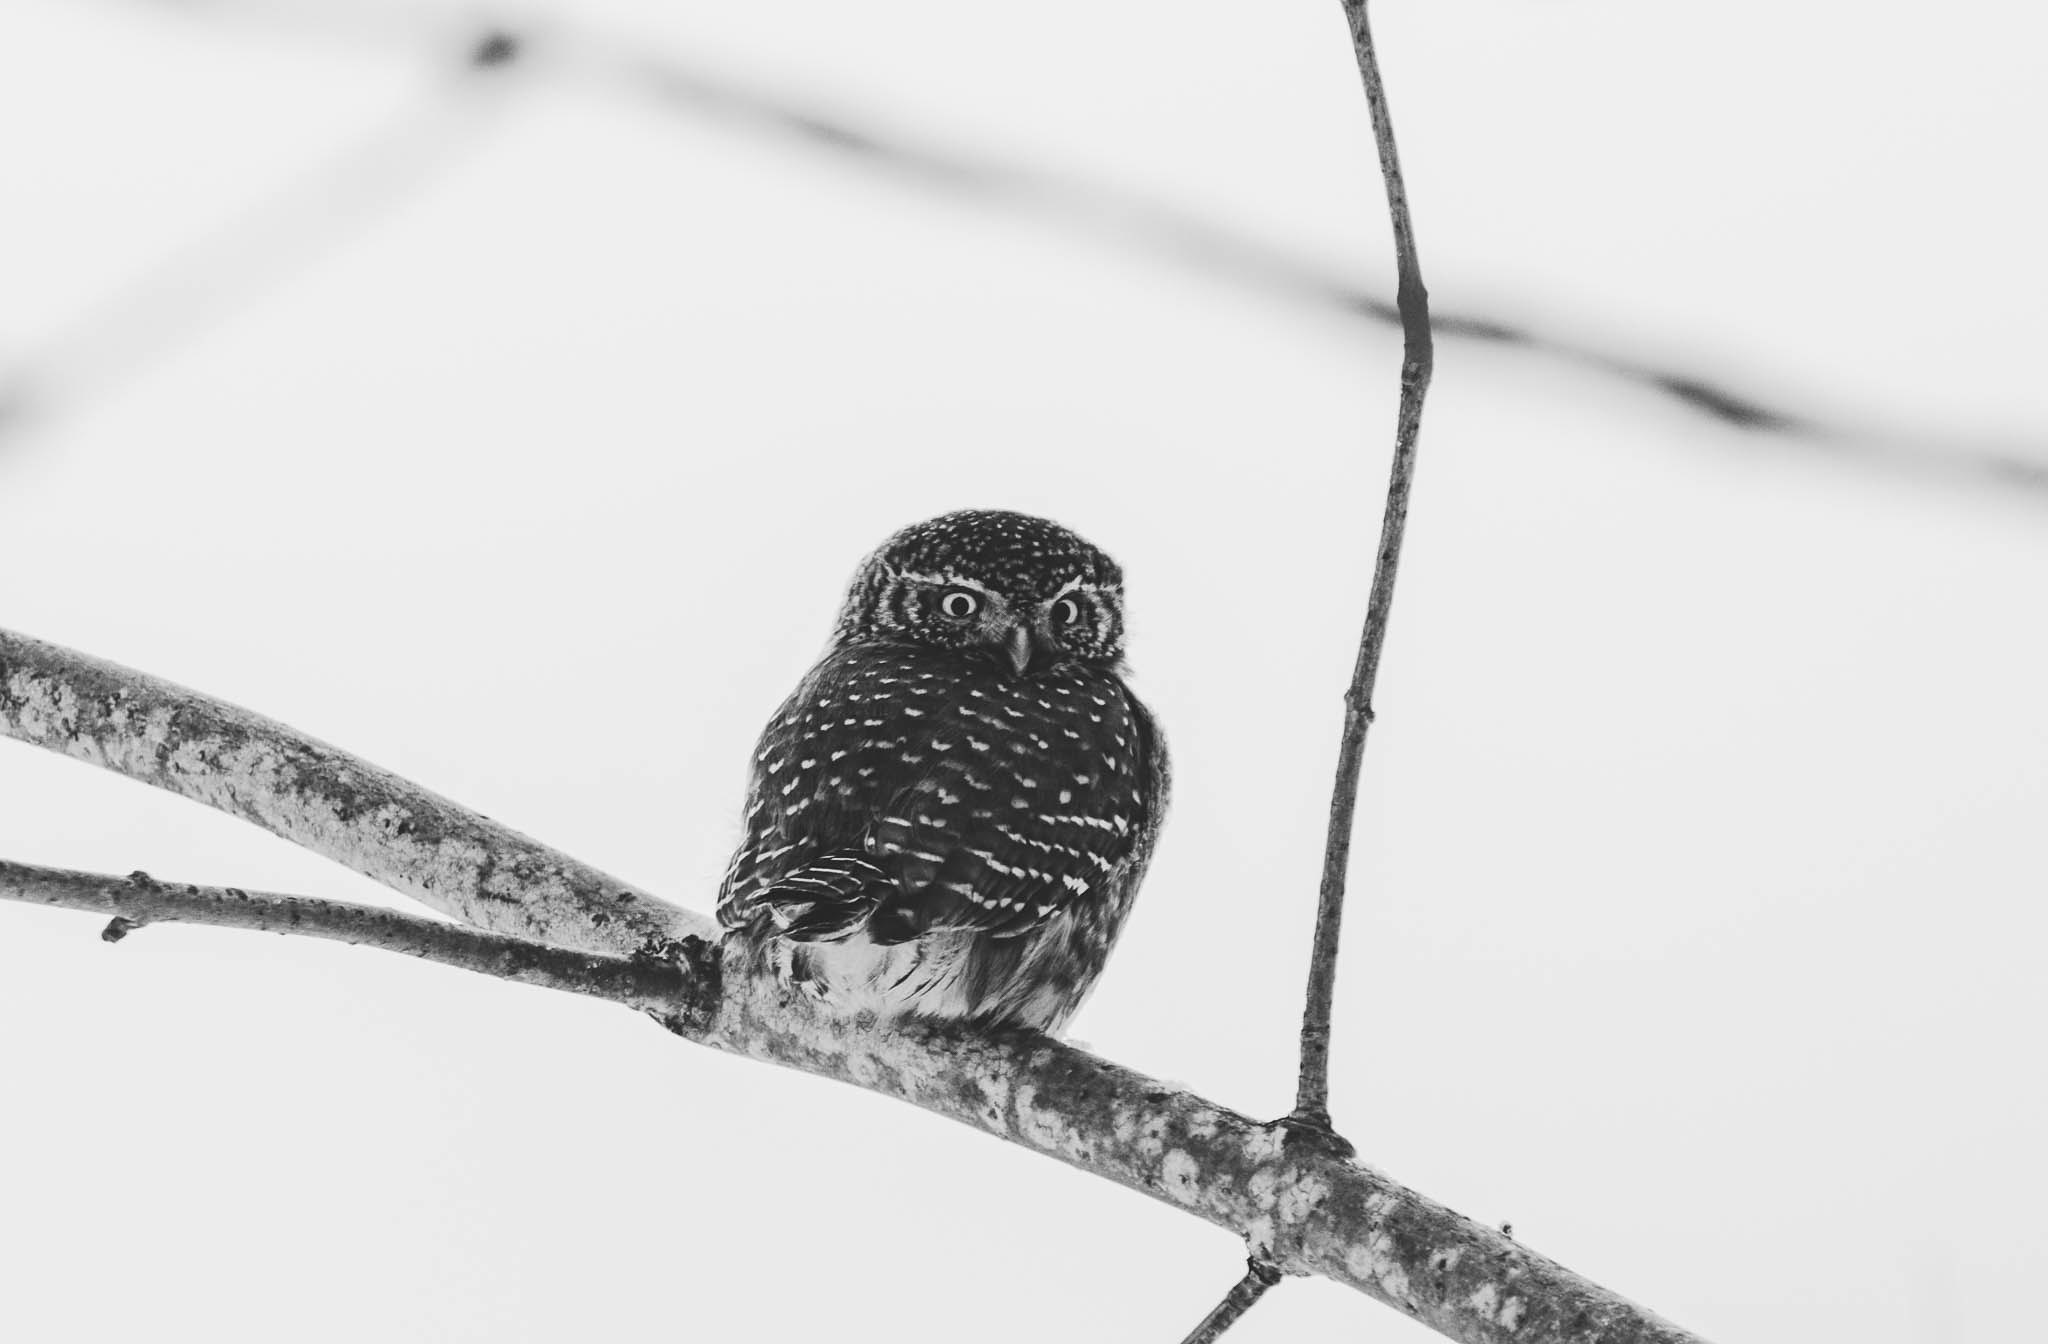 Varpuspöllö / Eurasian pygmy owl